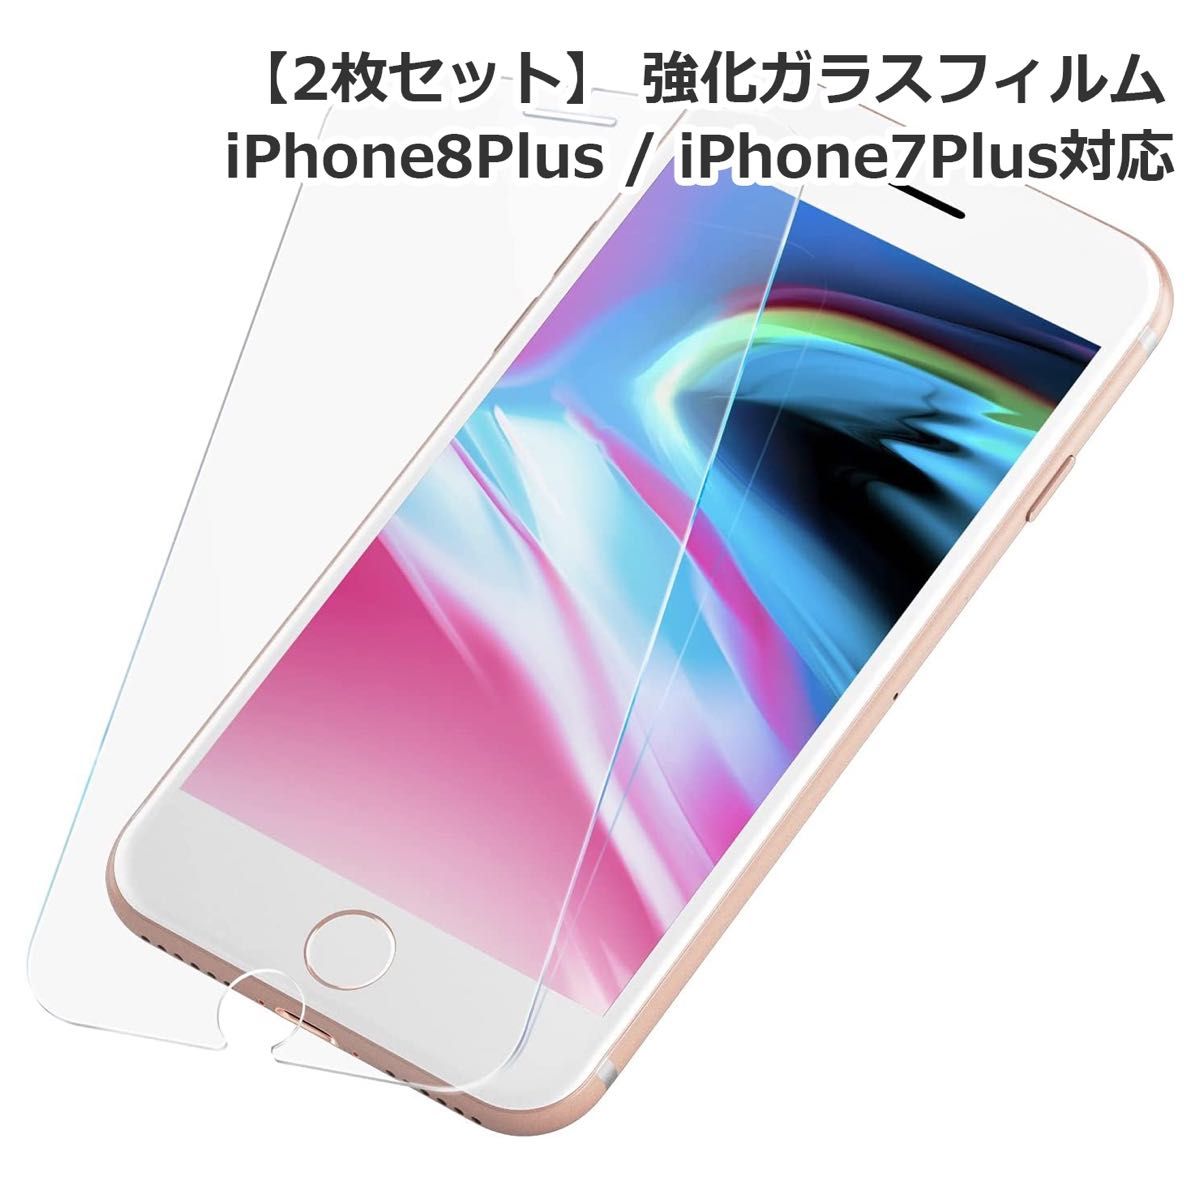 iPhone8Plus 7Plus 対応の強化ガラスフィルム 2枚セット ガラスフィルム 強化ガラスフィルム